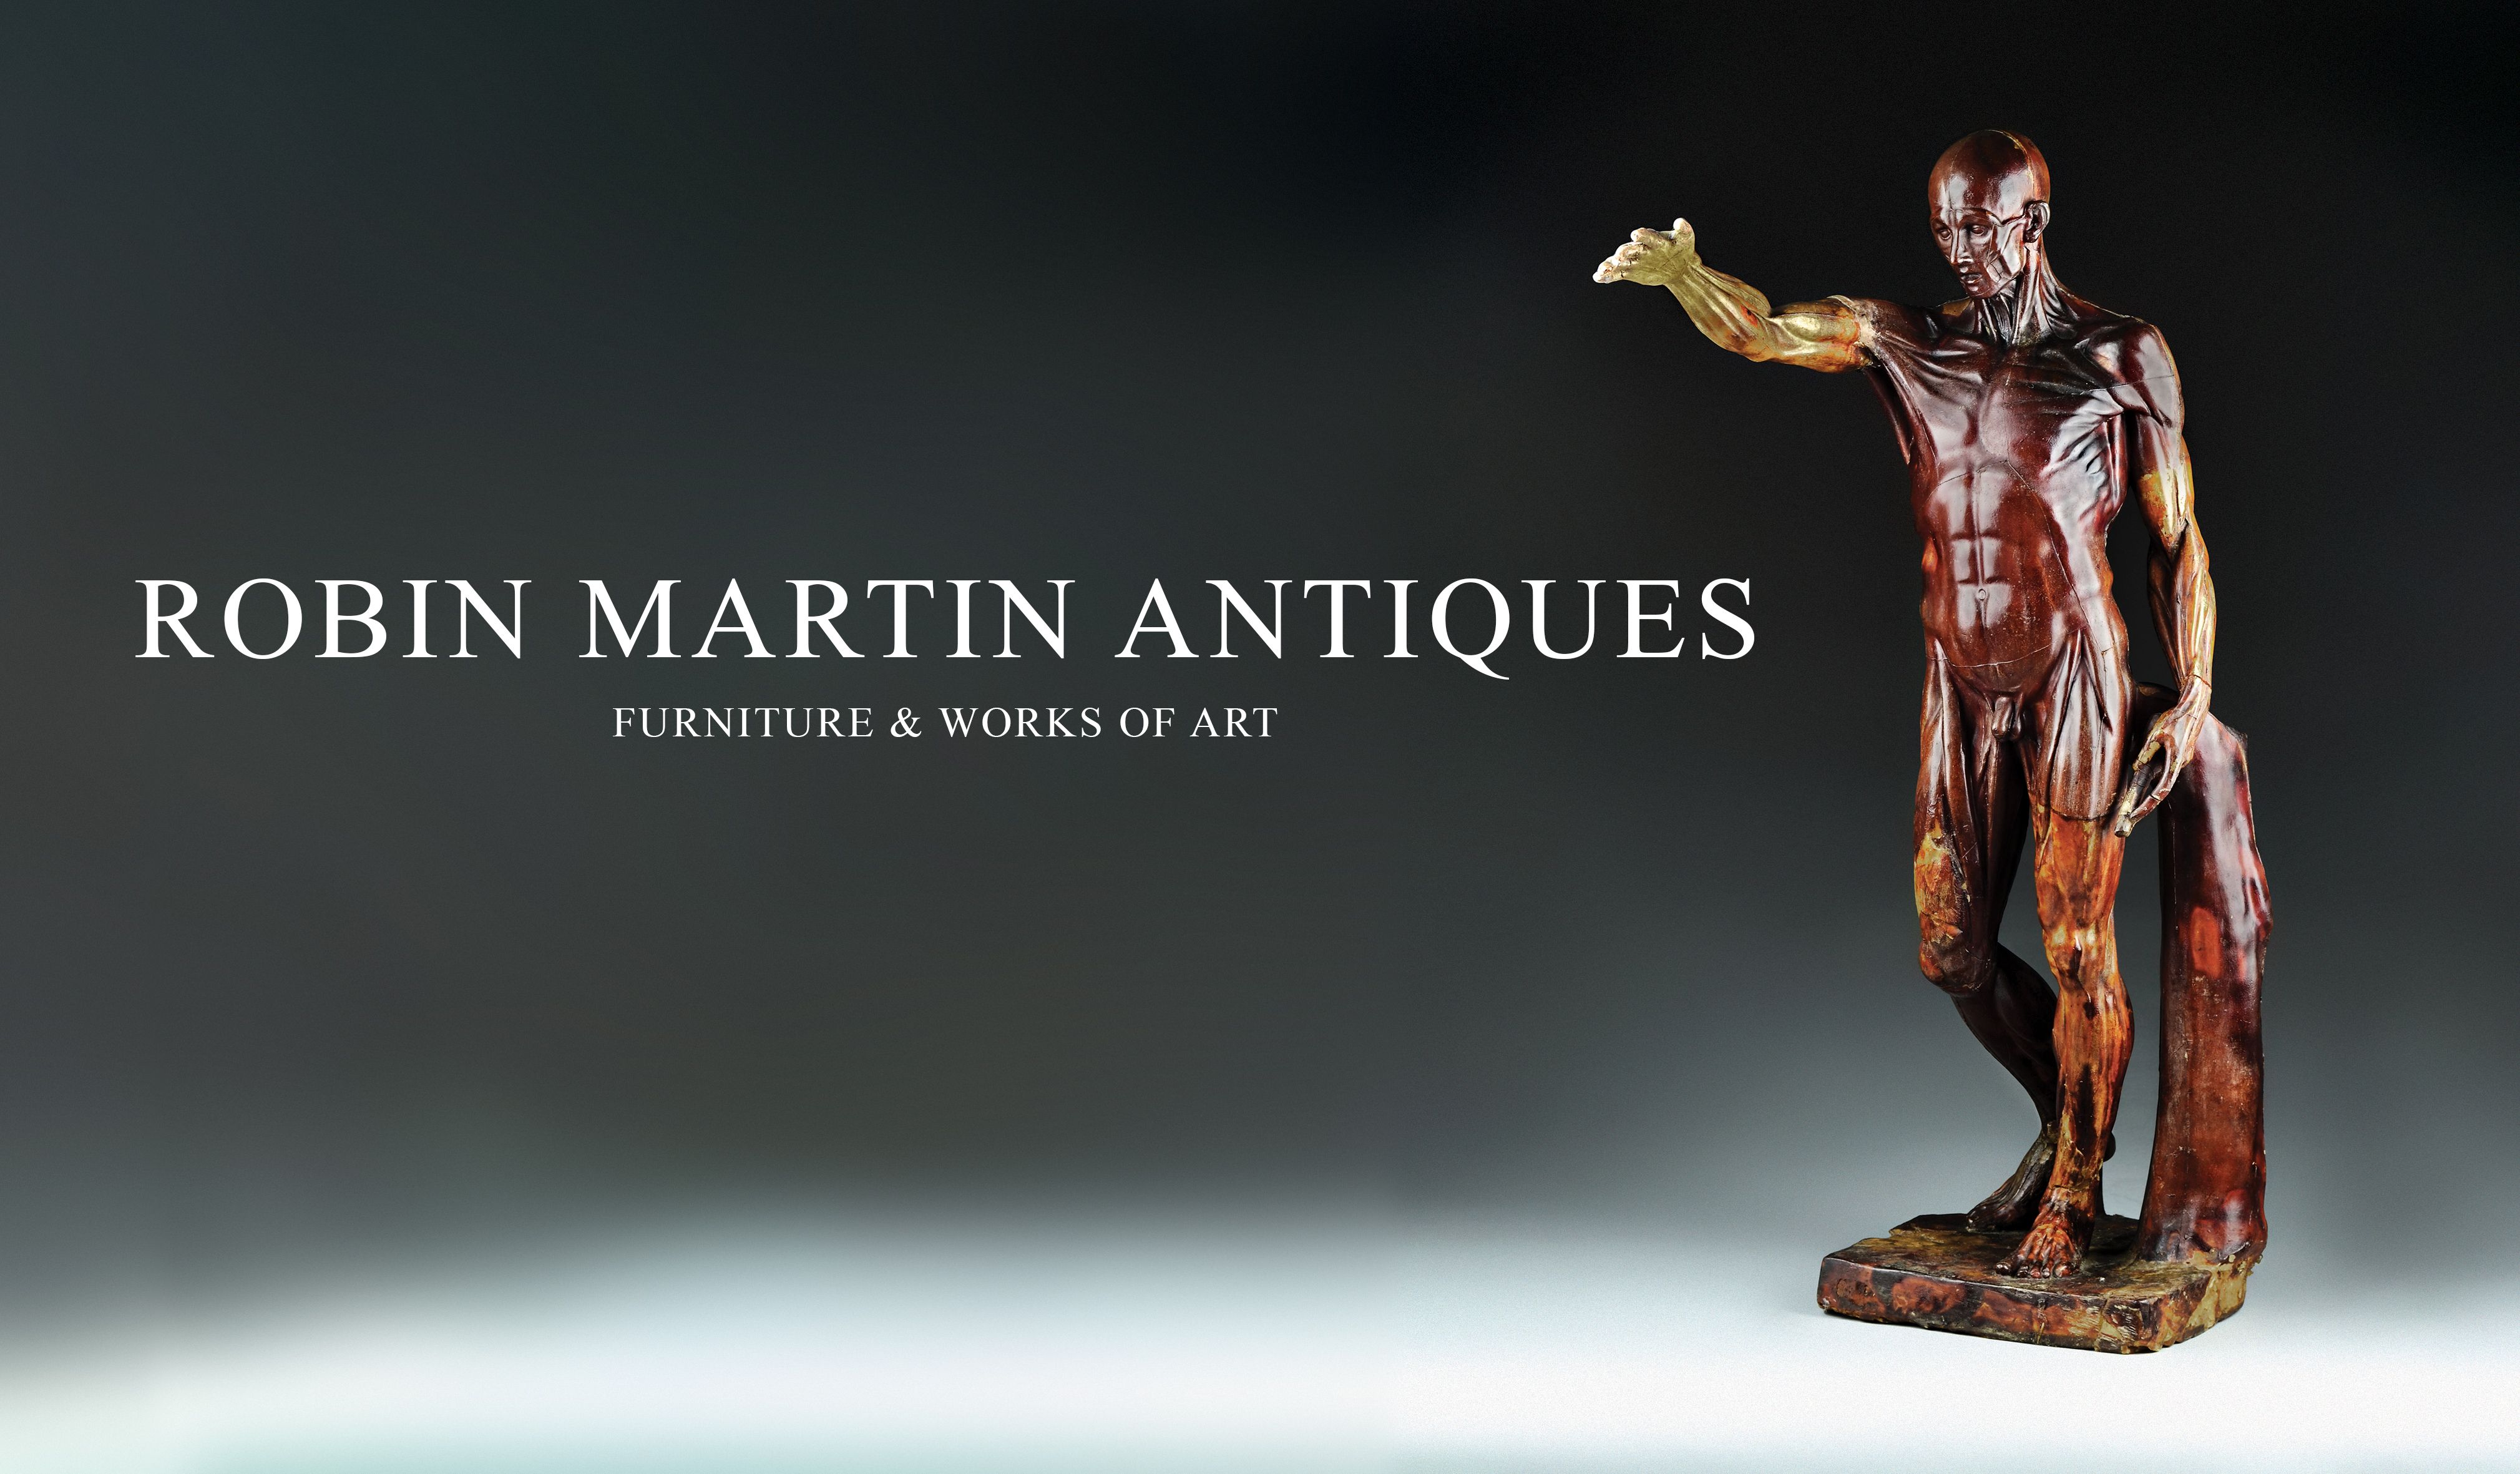 Robin Martin Antiques